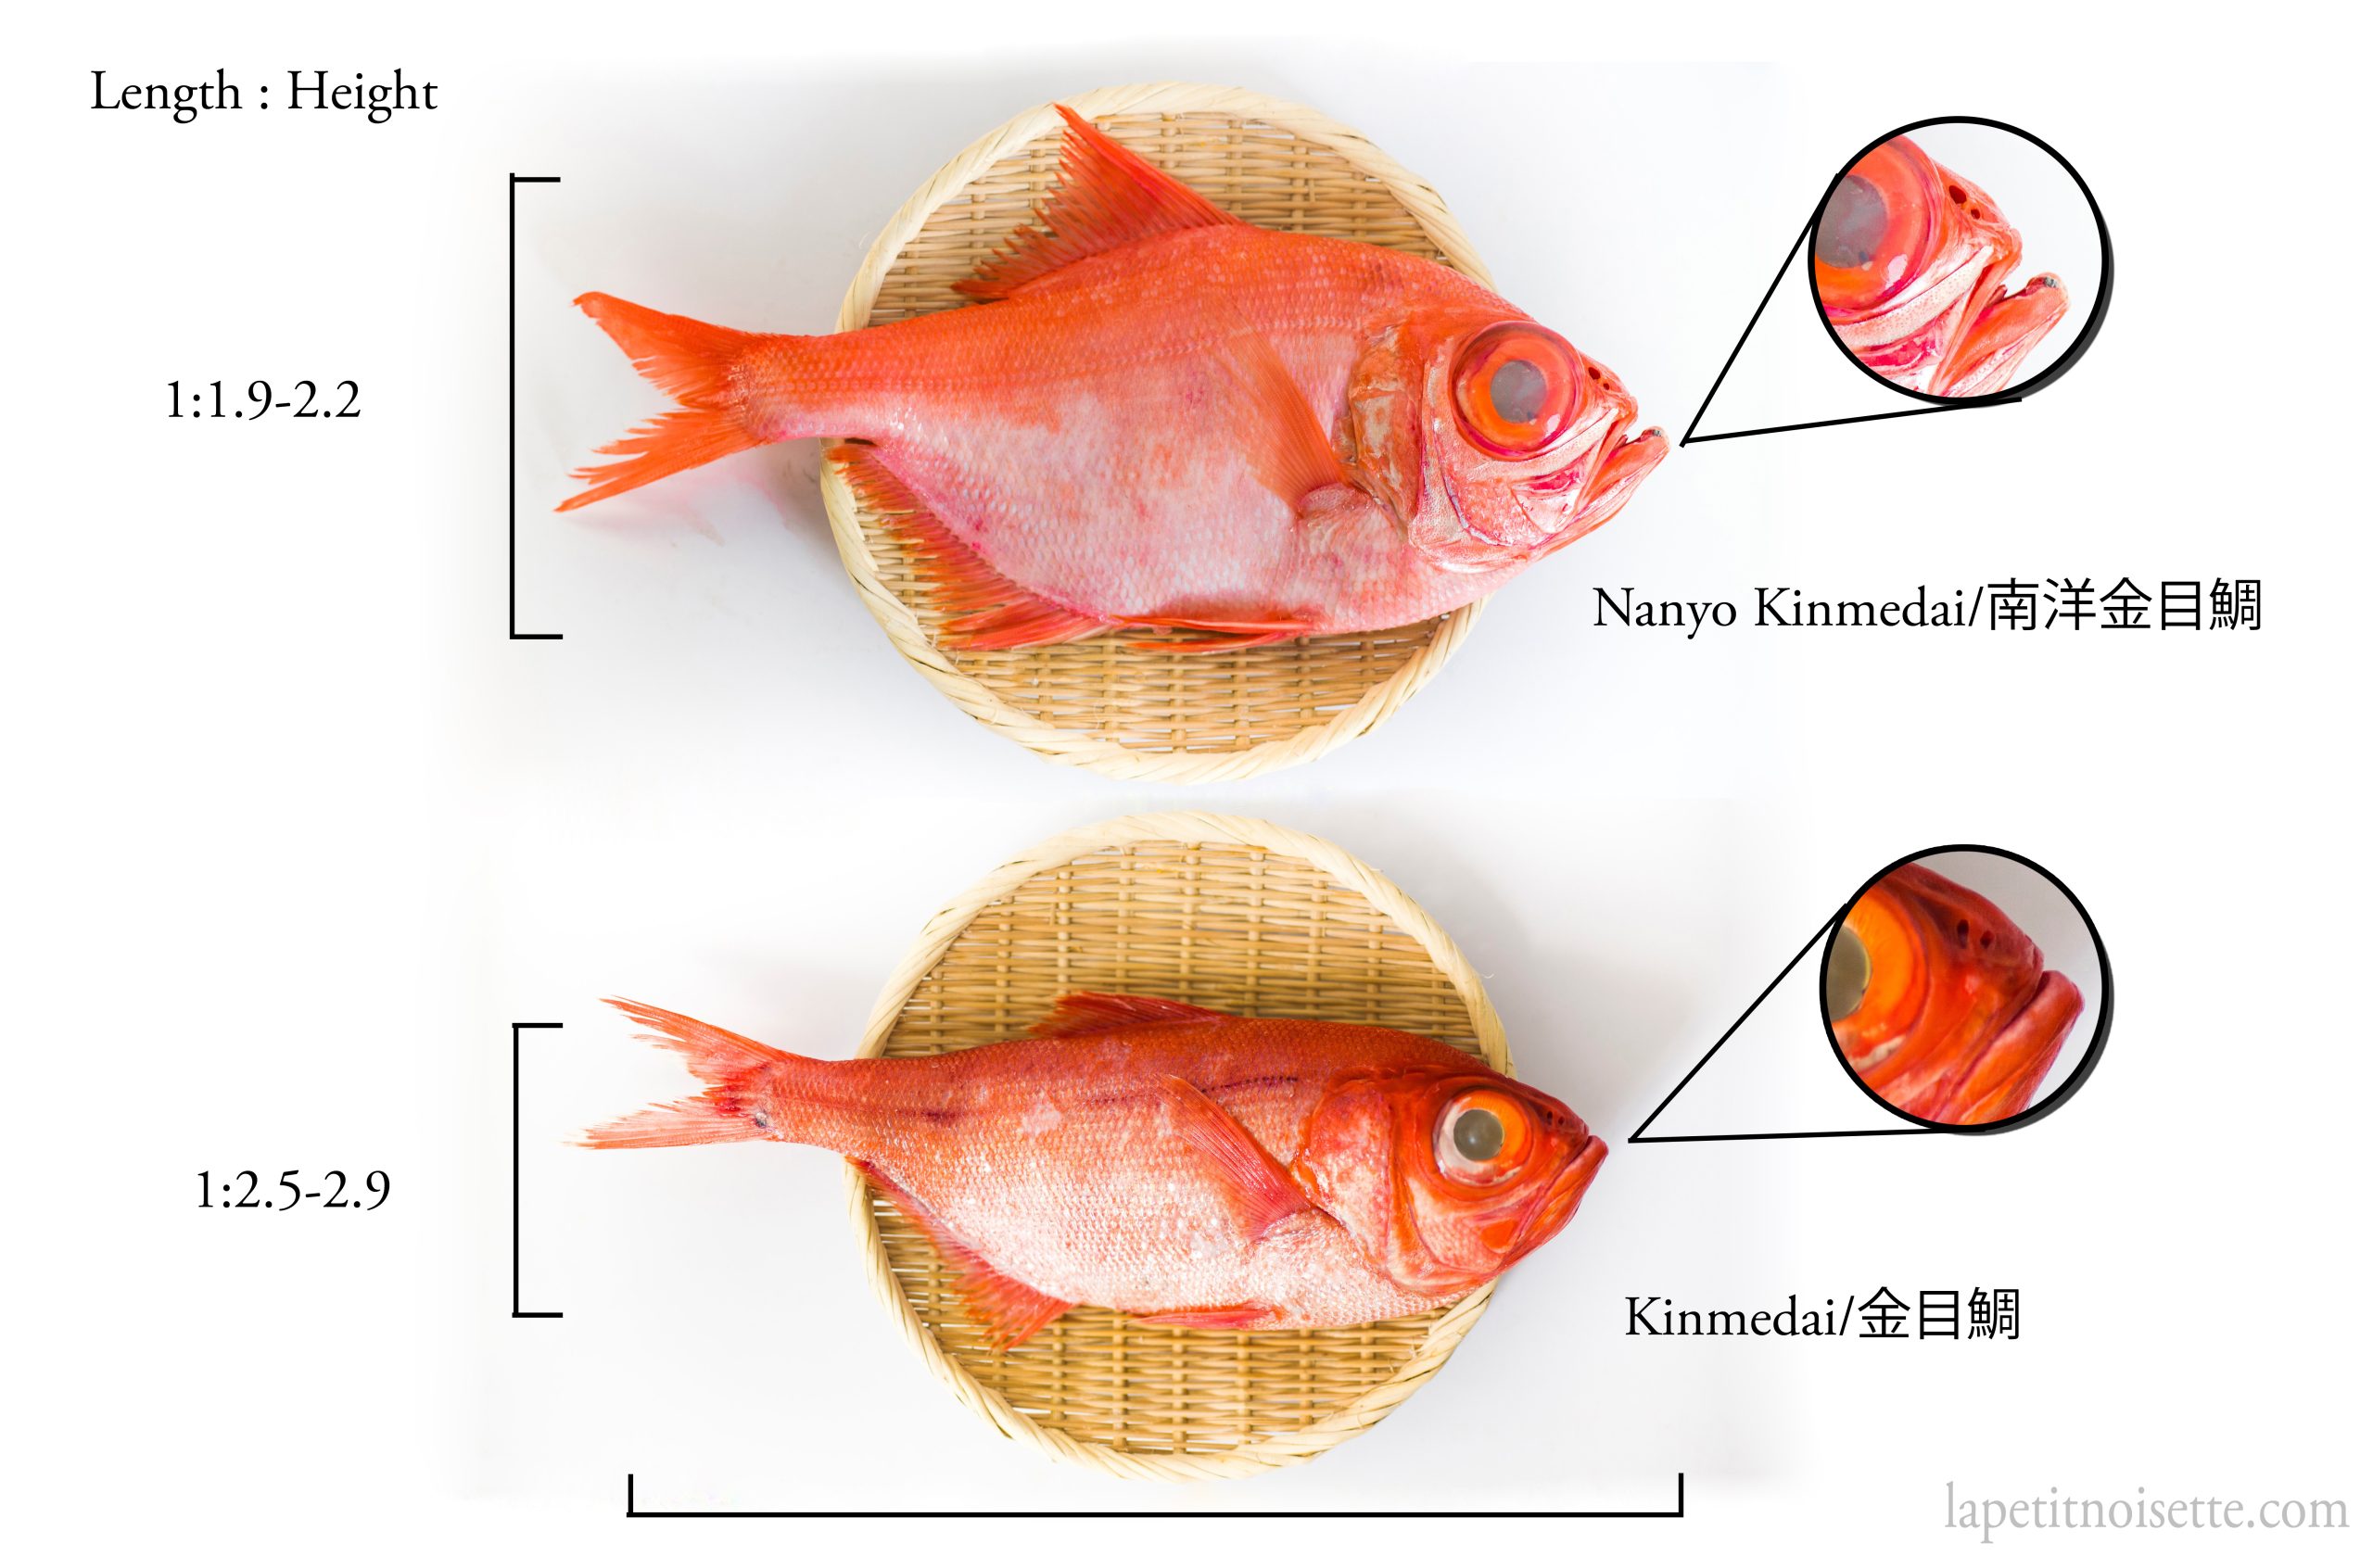 A comparison of features between kinmedai and nanyo-kinmedai.